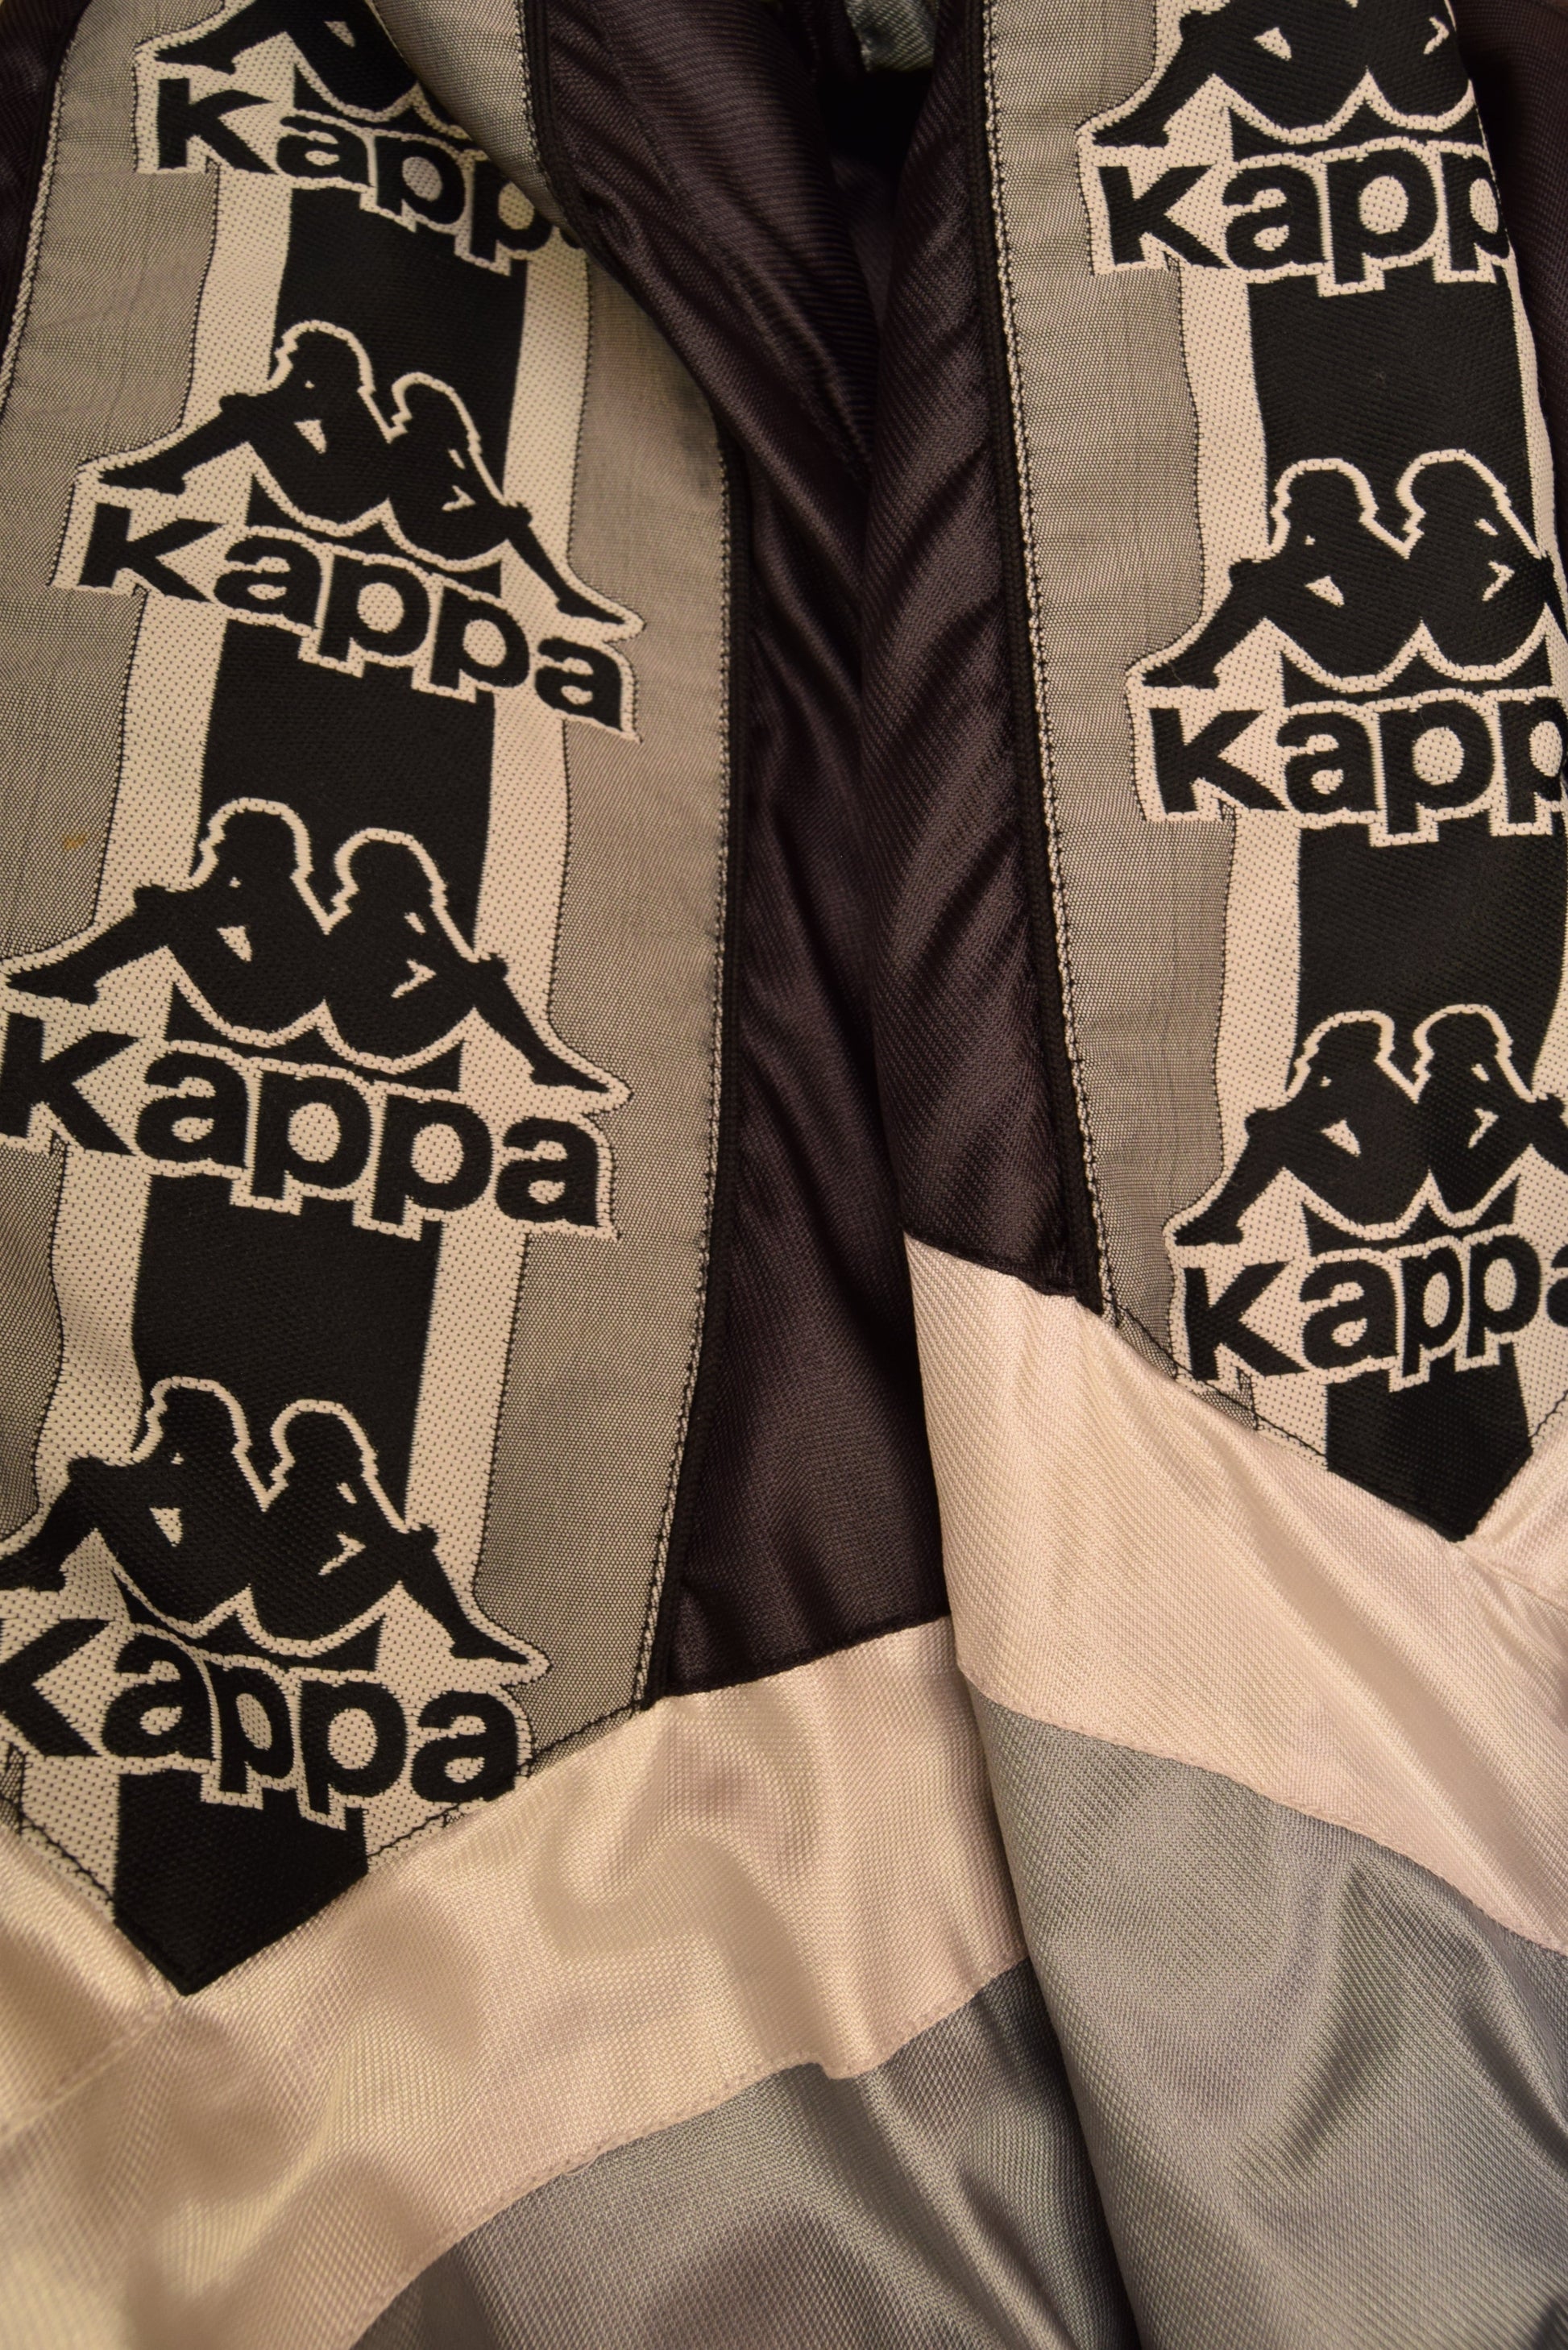 Juventus Kappa 1995-1997 Thick Jacket Size XL Black Silver Grey